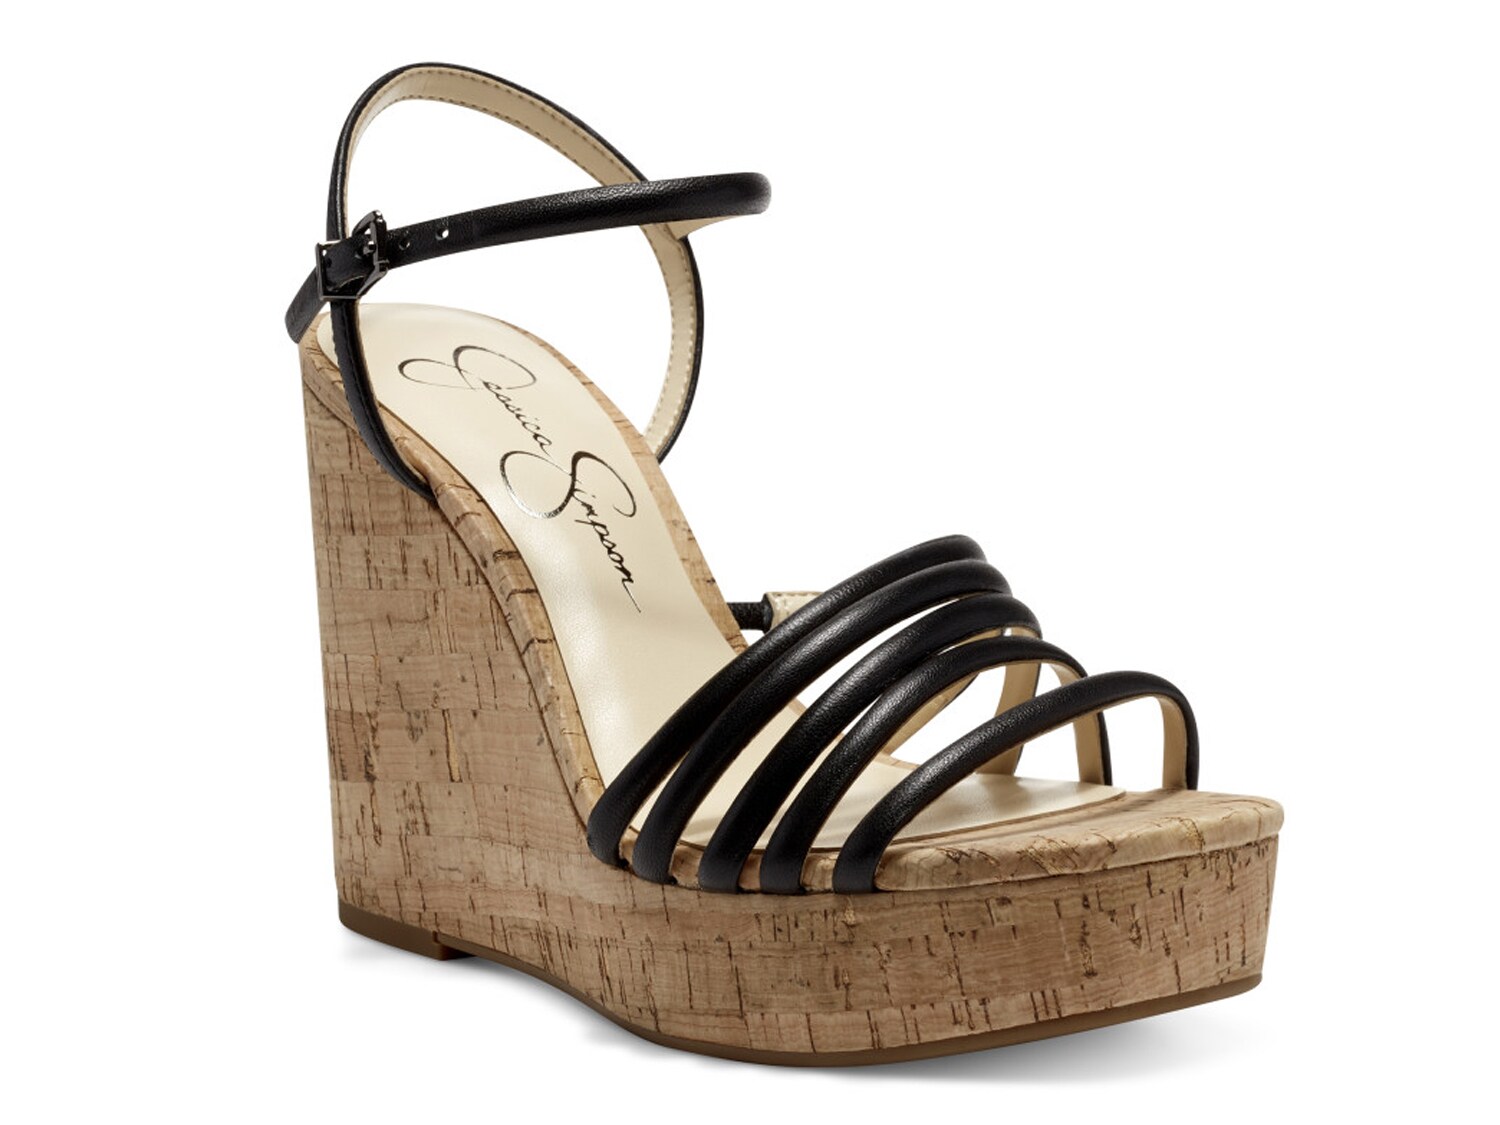 Jessica Simpson Sierah Wedge Sandal - Free Shipping | DSW